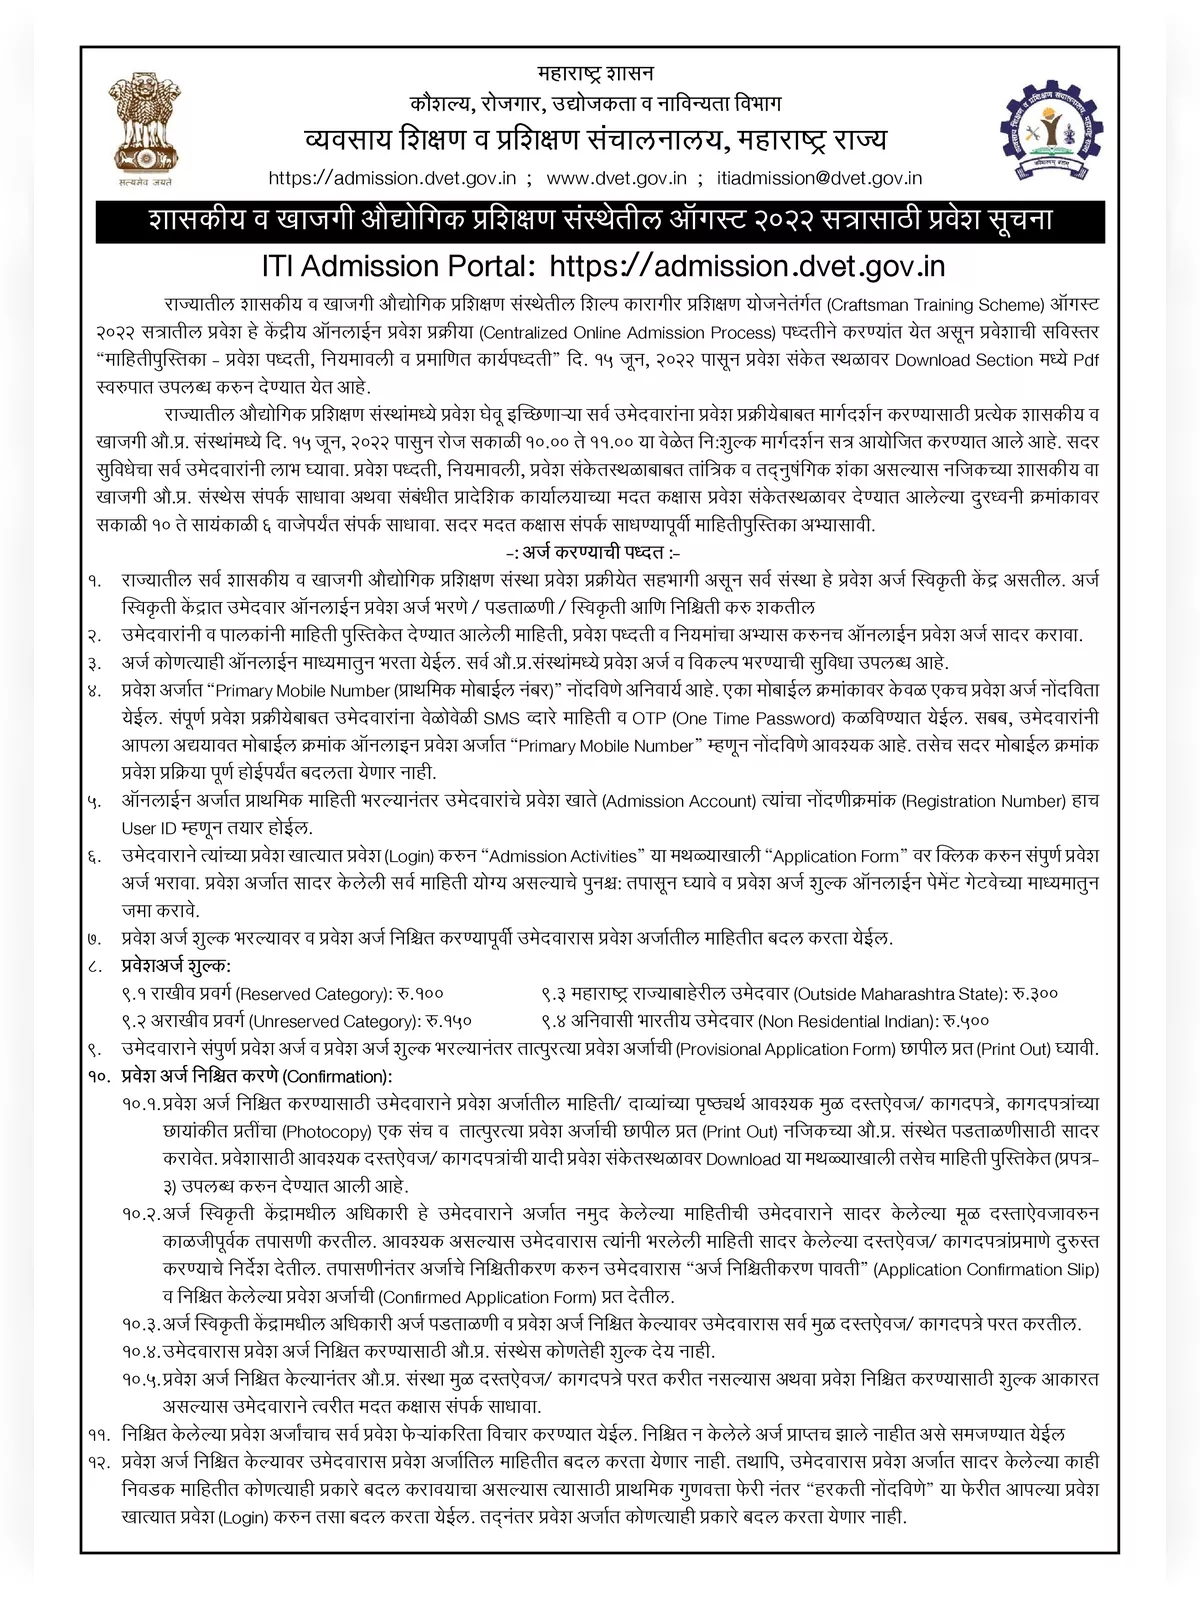 ITI Merit List 2022 Maharashtra Notice